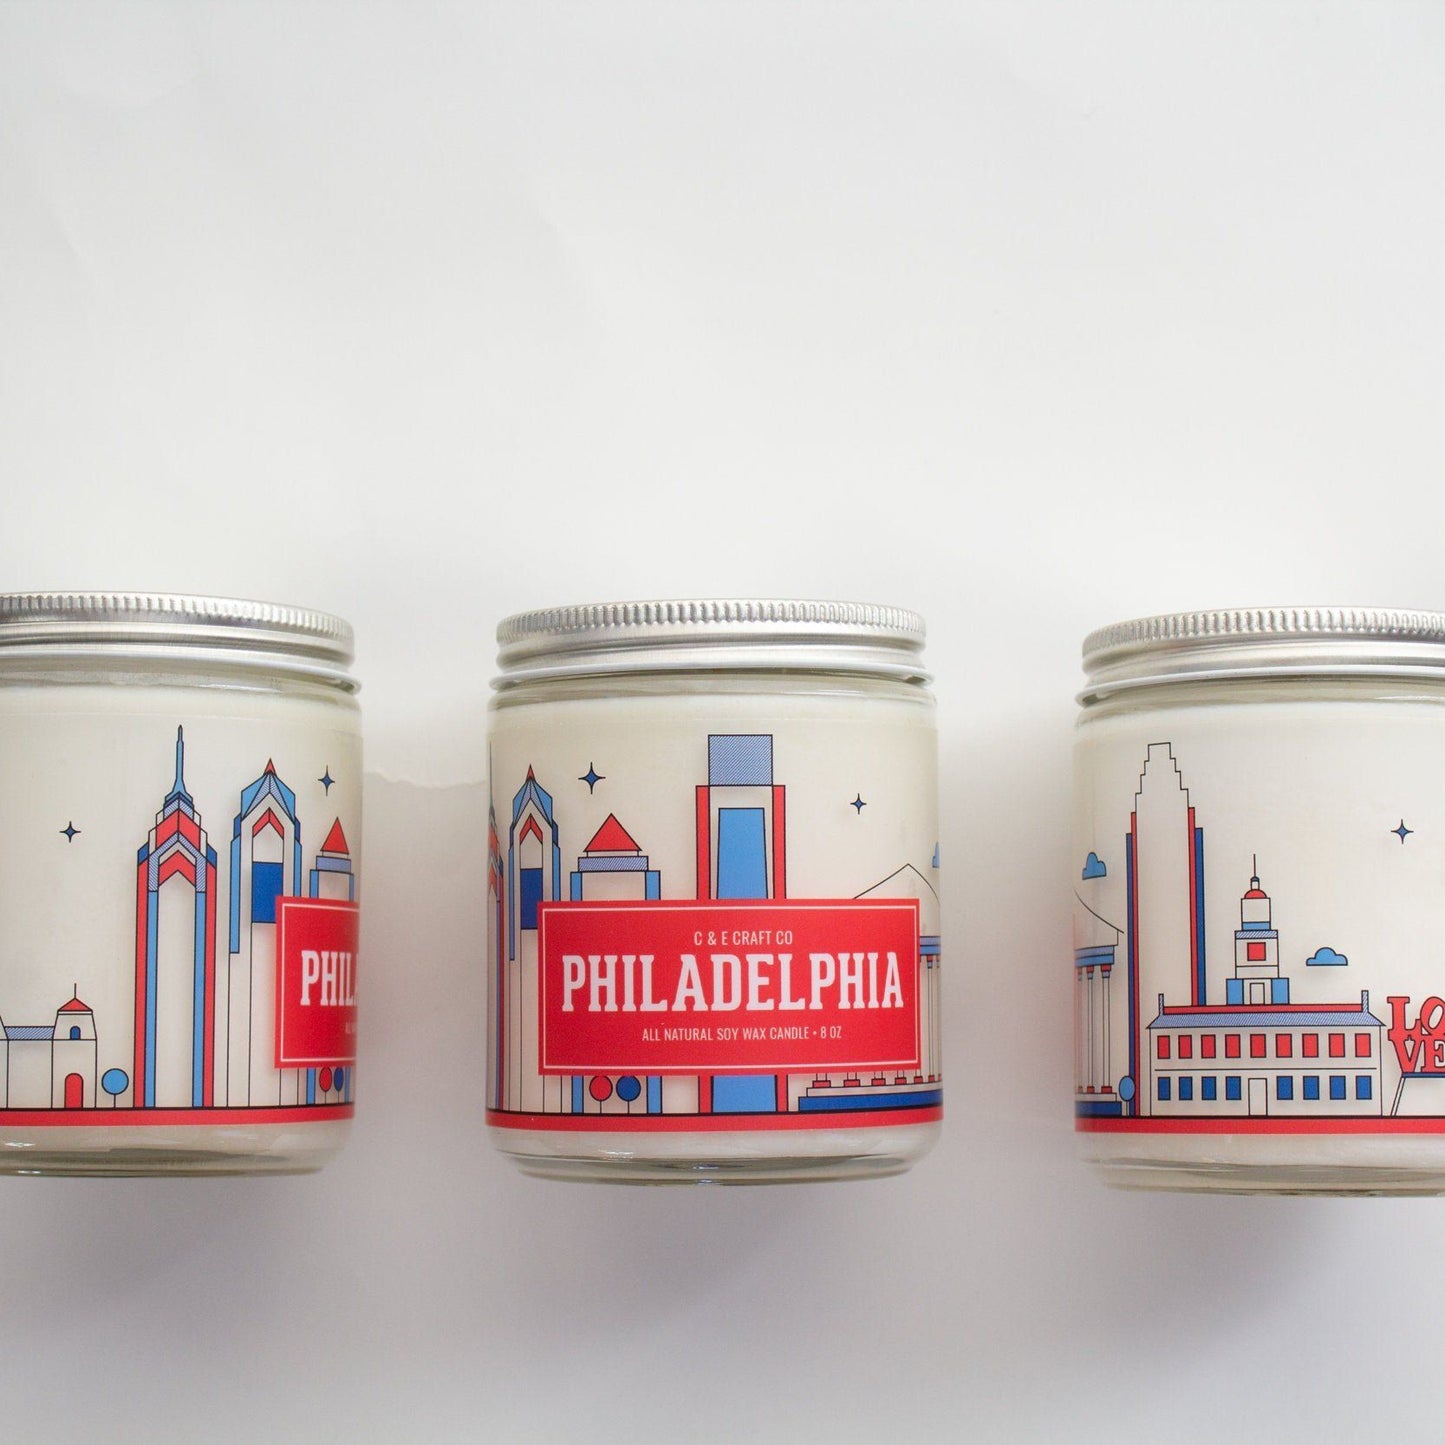 C&E - Philadelphia Skyline - Soy Wax Candle - Philadelphia Gift C & E Craft Co 